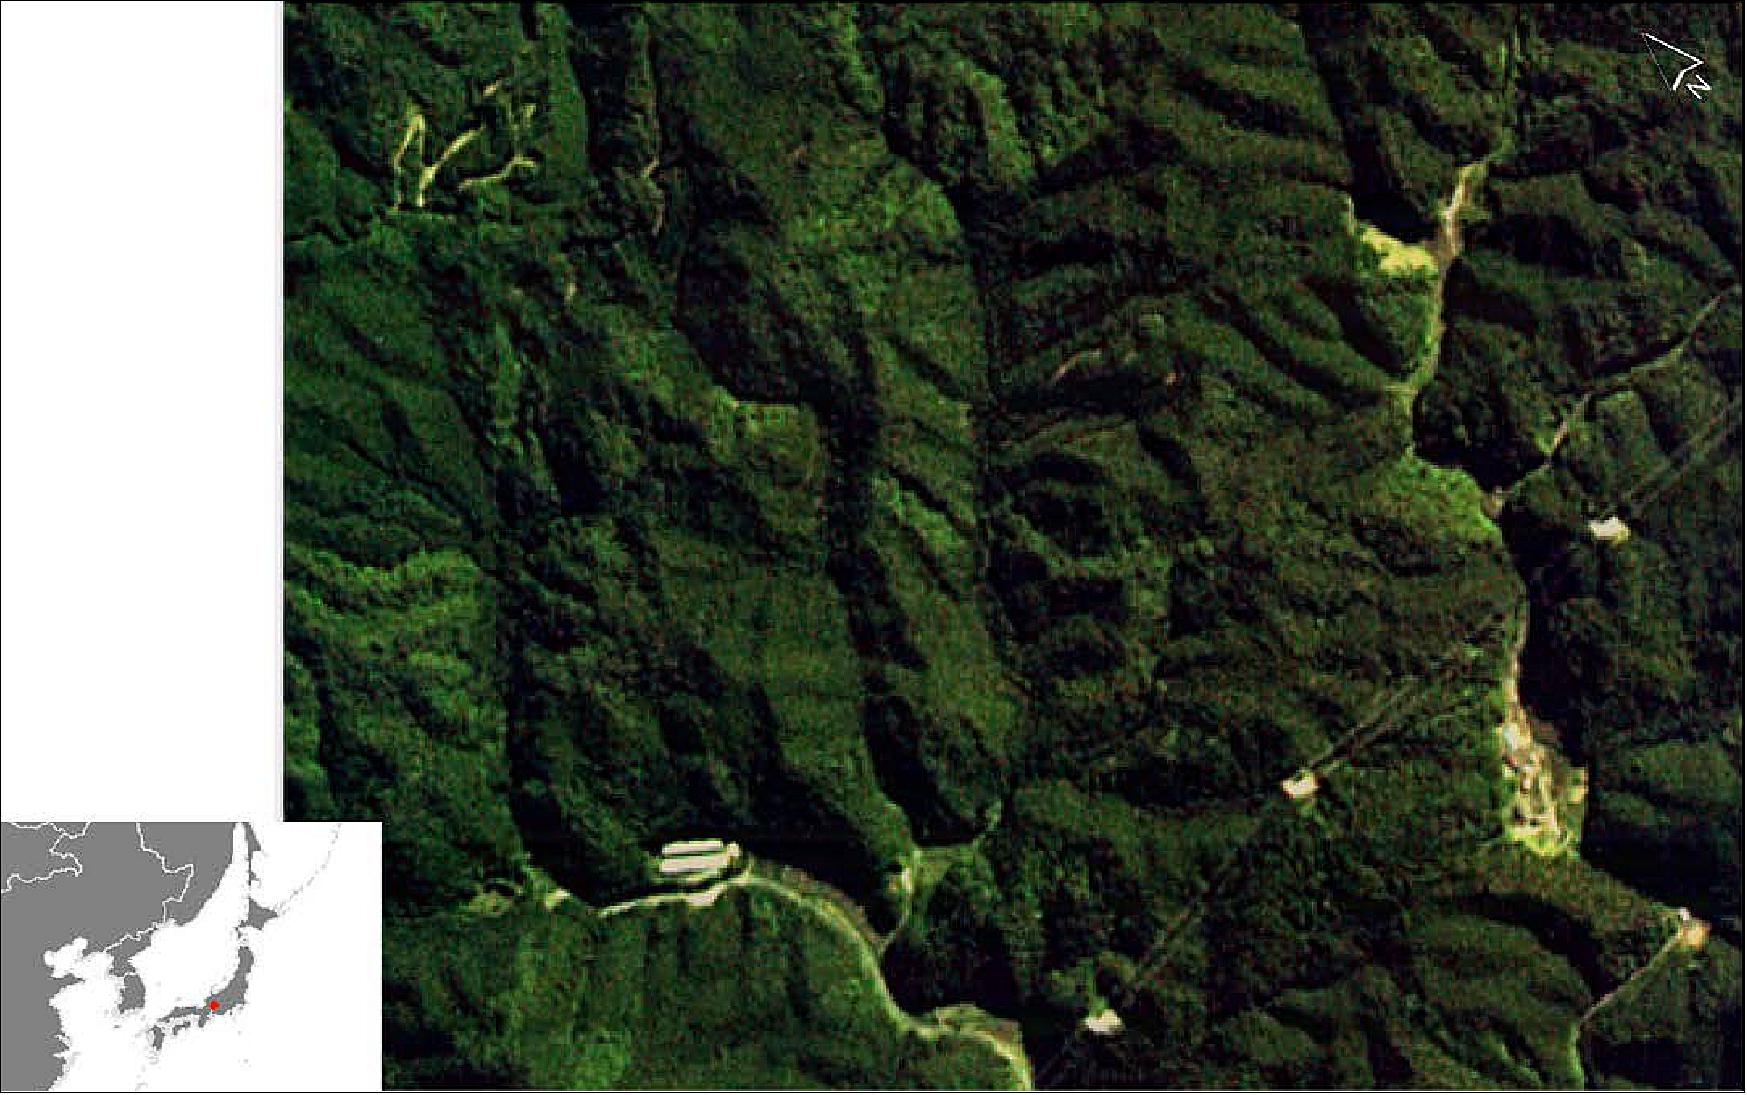 Figure 11: HPT (High Precision Telescope) image of the Kamo District, Gifu Prefecture, Japan, captured on 18 May 2016 at 15:45:22 JST (image credit: Tohoku University)